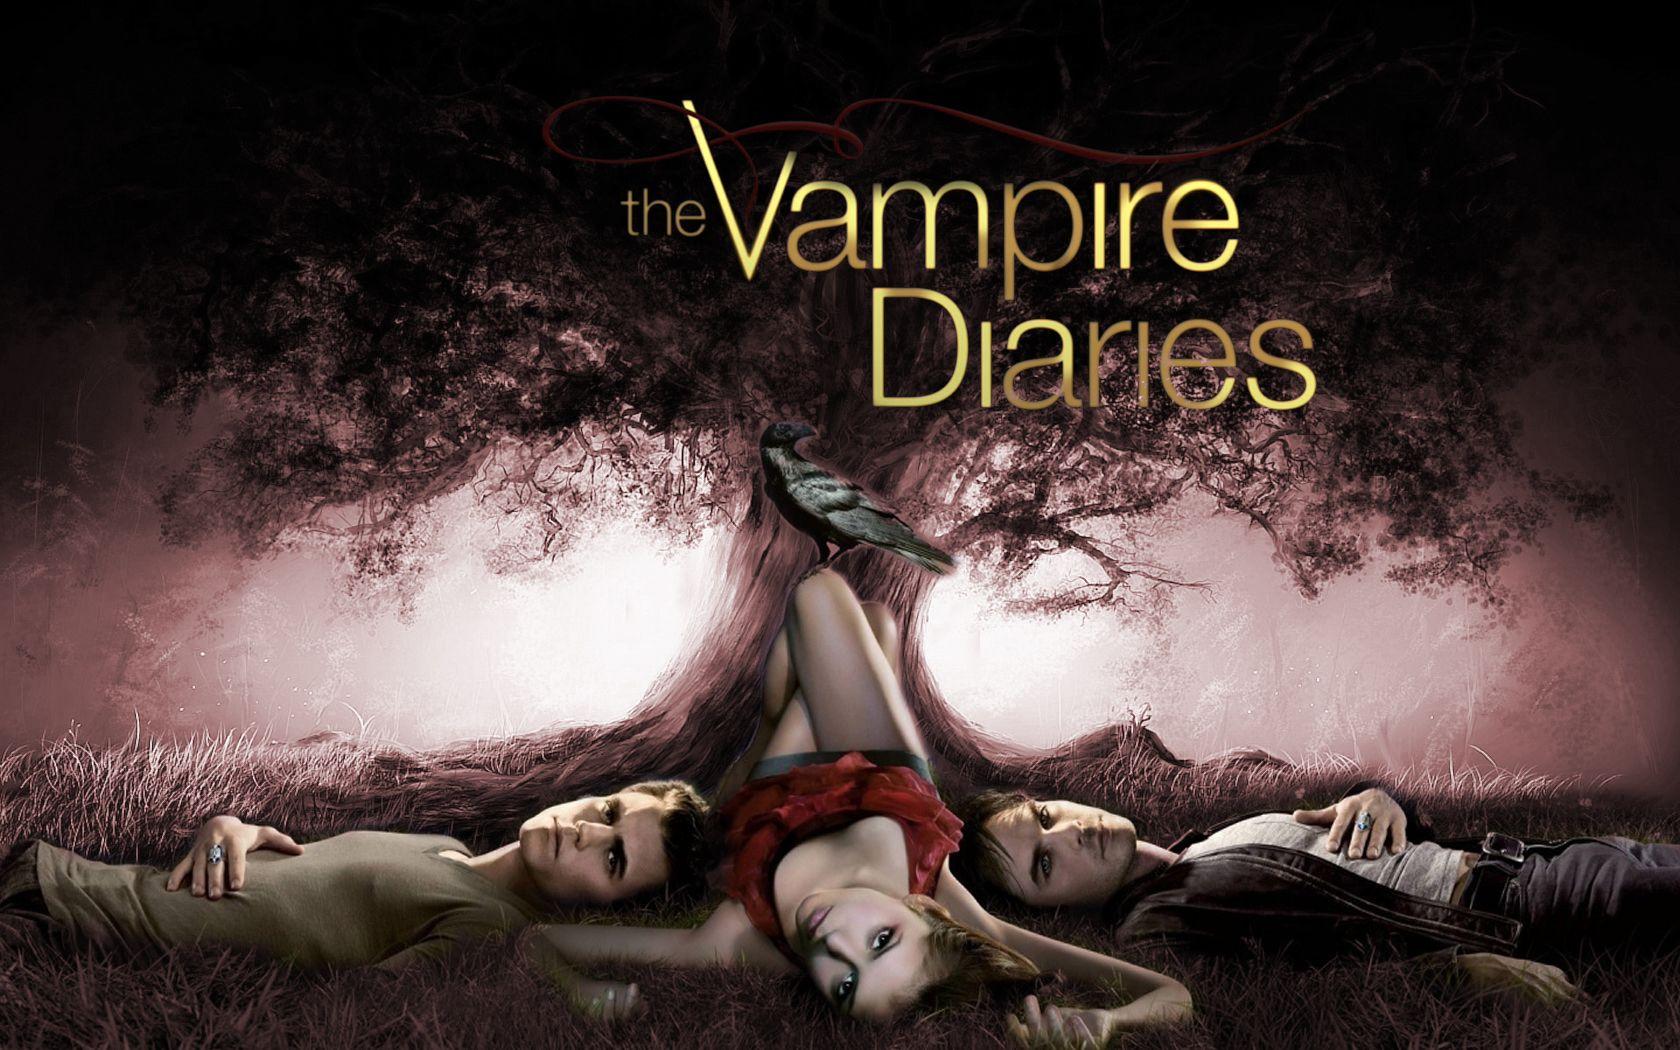 The Vampire Diares Logo - The Vampire Diaries Logo HD Wallpaper, Background Image